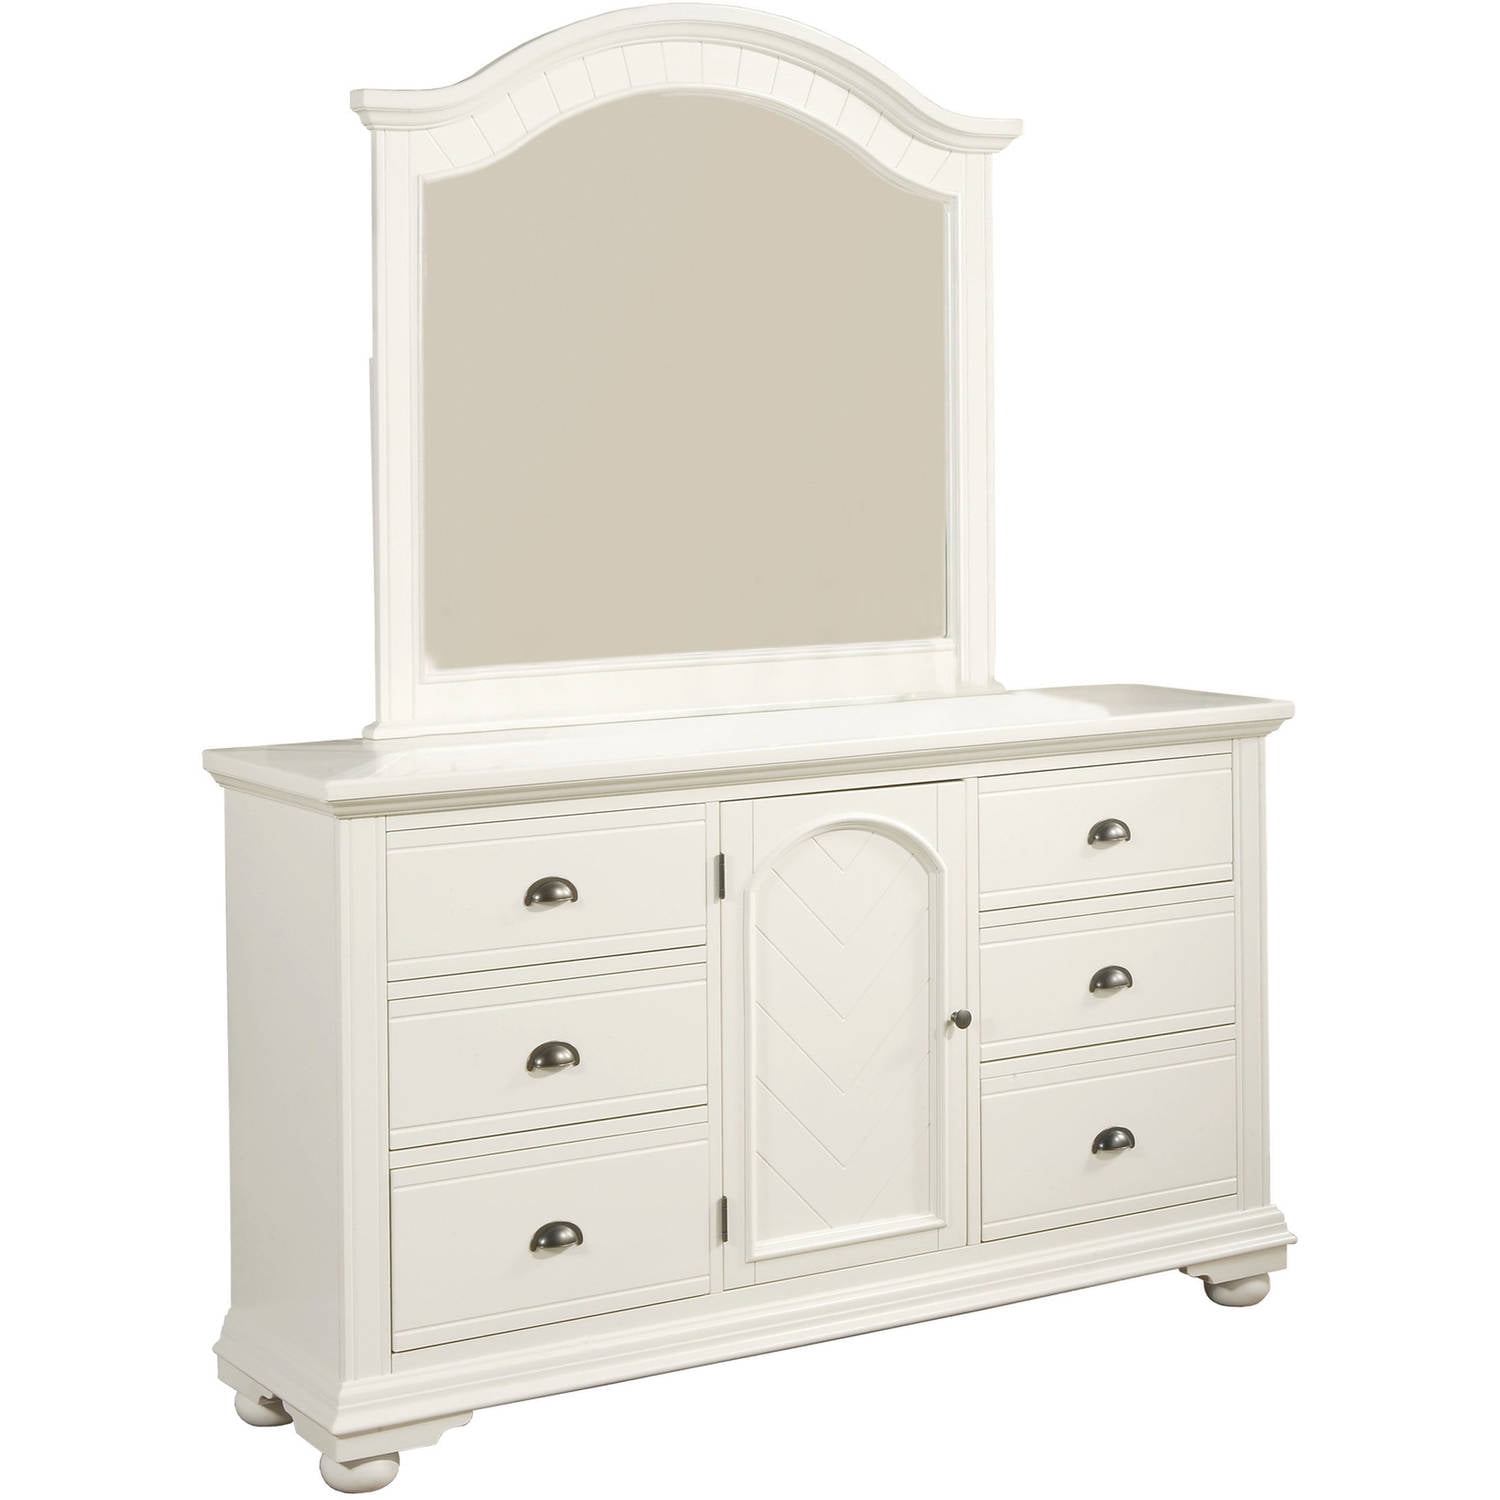 Picket House Furnishings Addison White Dresser And Mirror Set